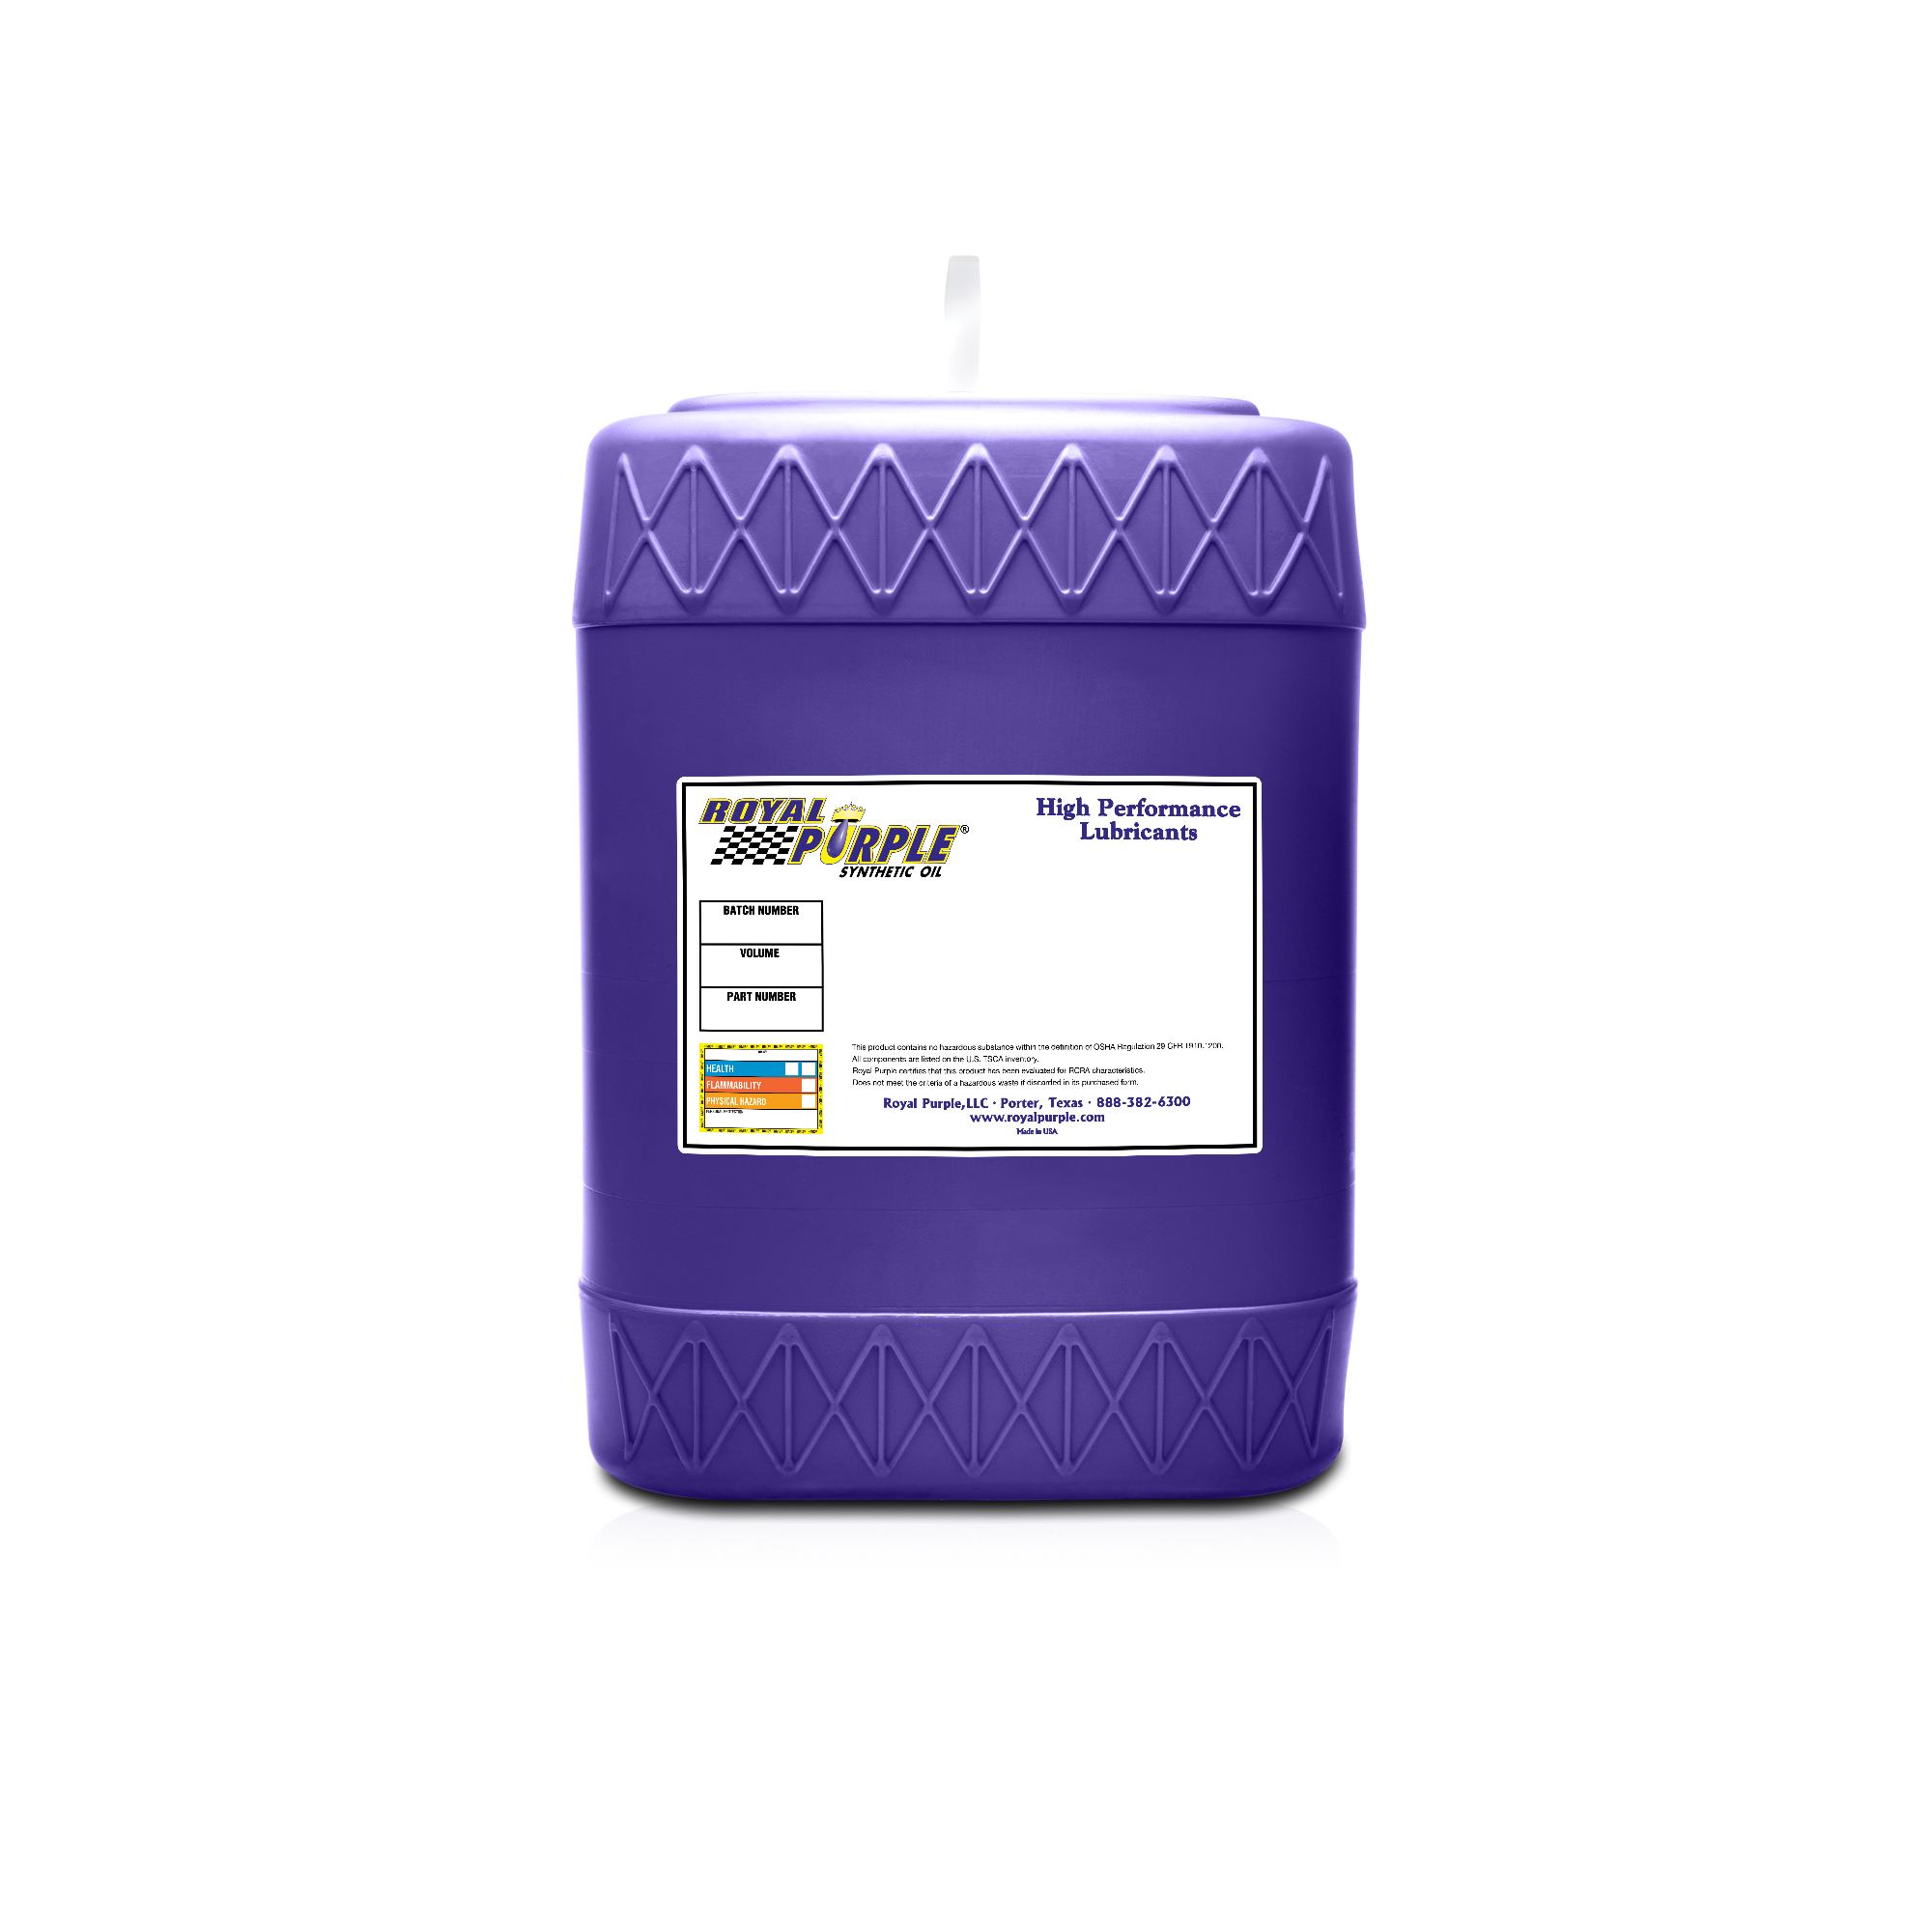 Royal Purple VP Preservative Oil 10 5-Gallon Pail 11370 Image